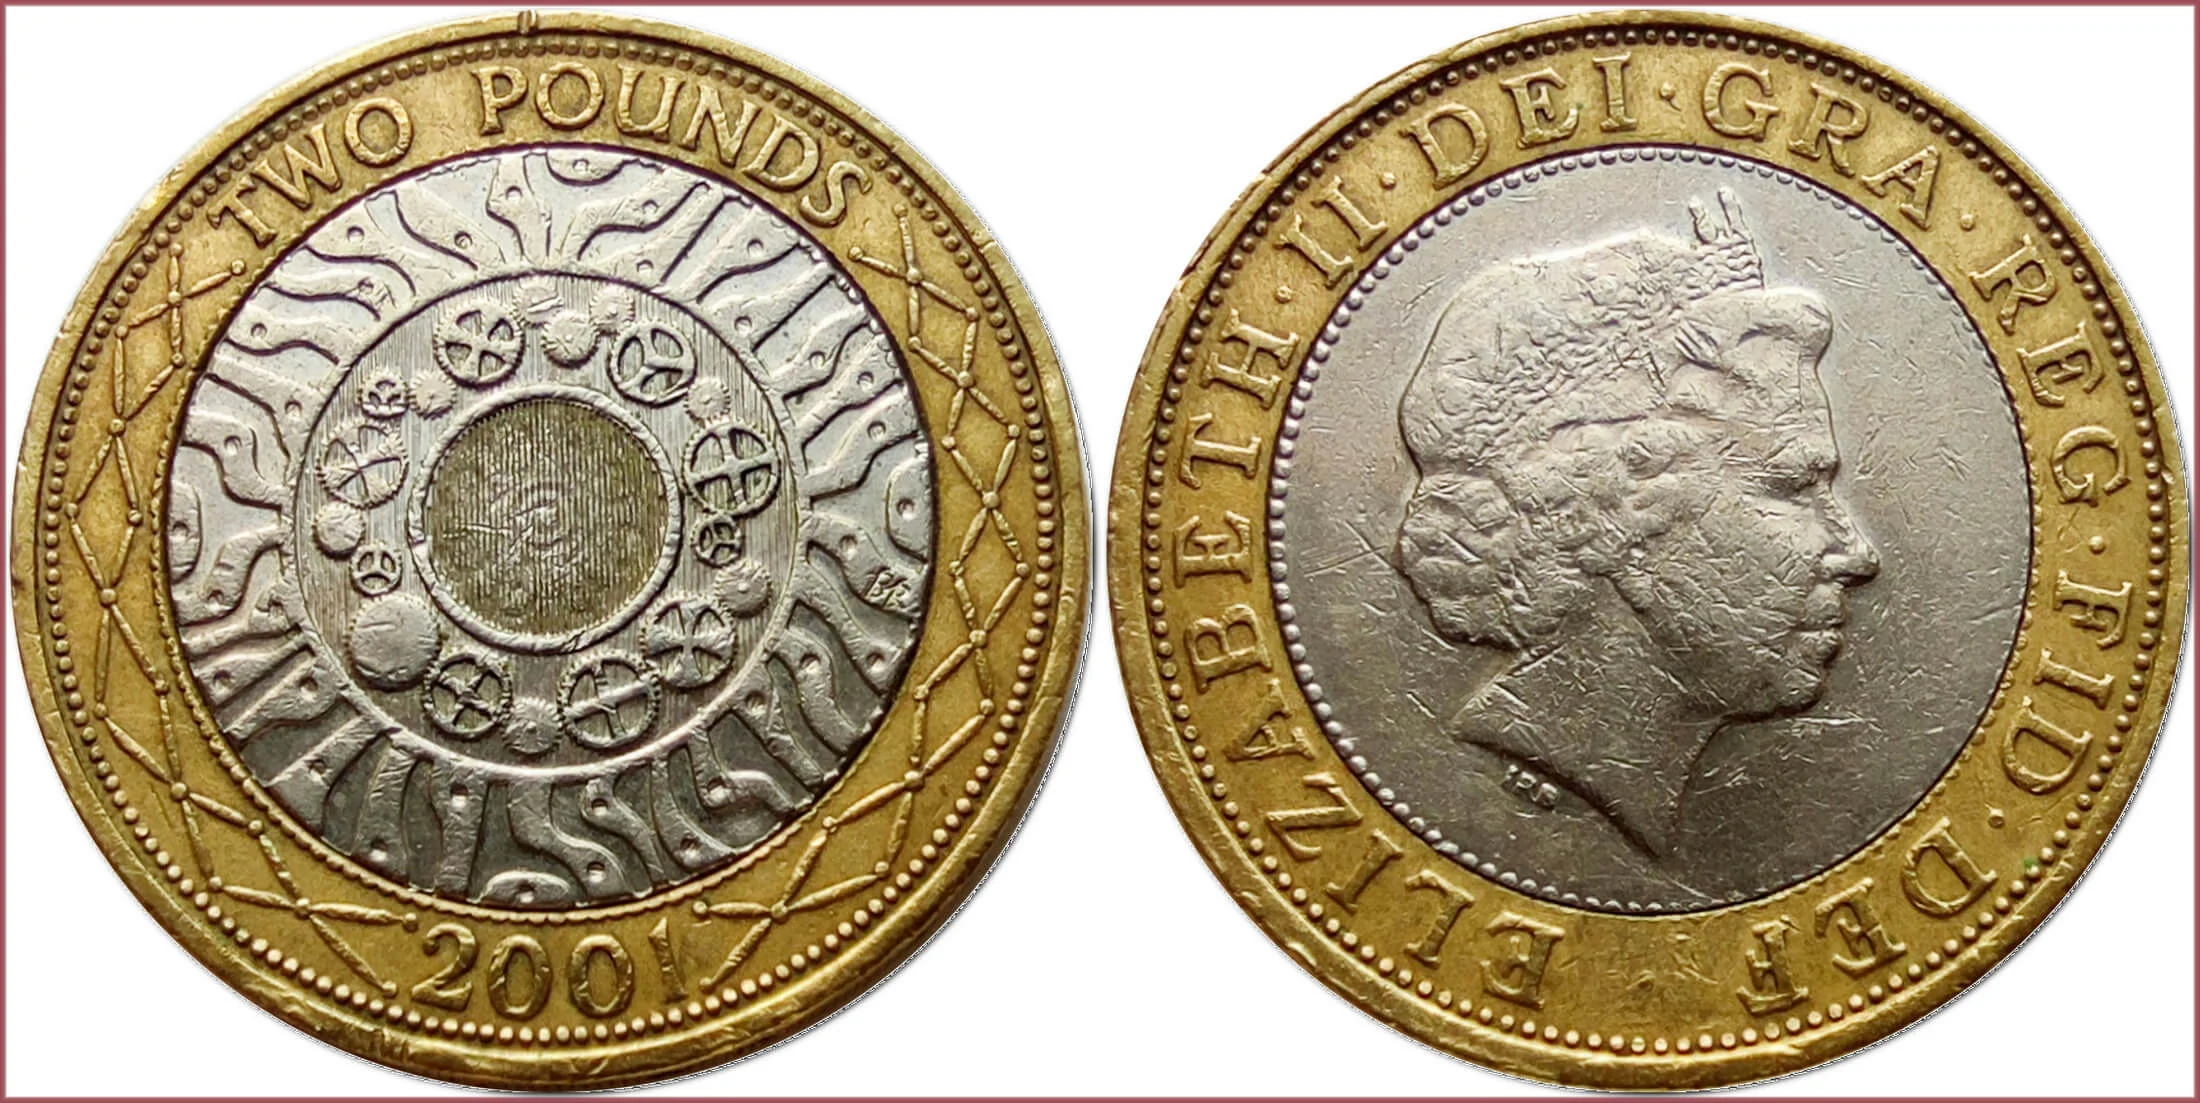 2 pound, 2001: United Kingdom